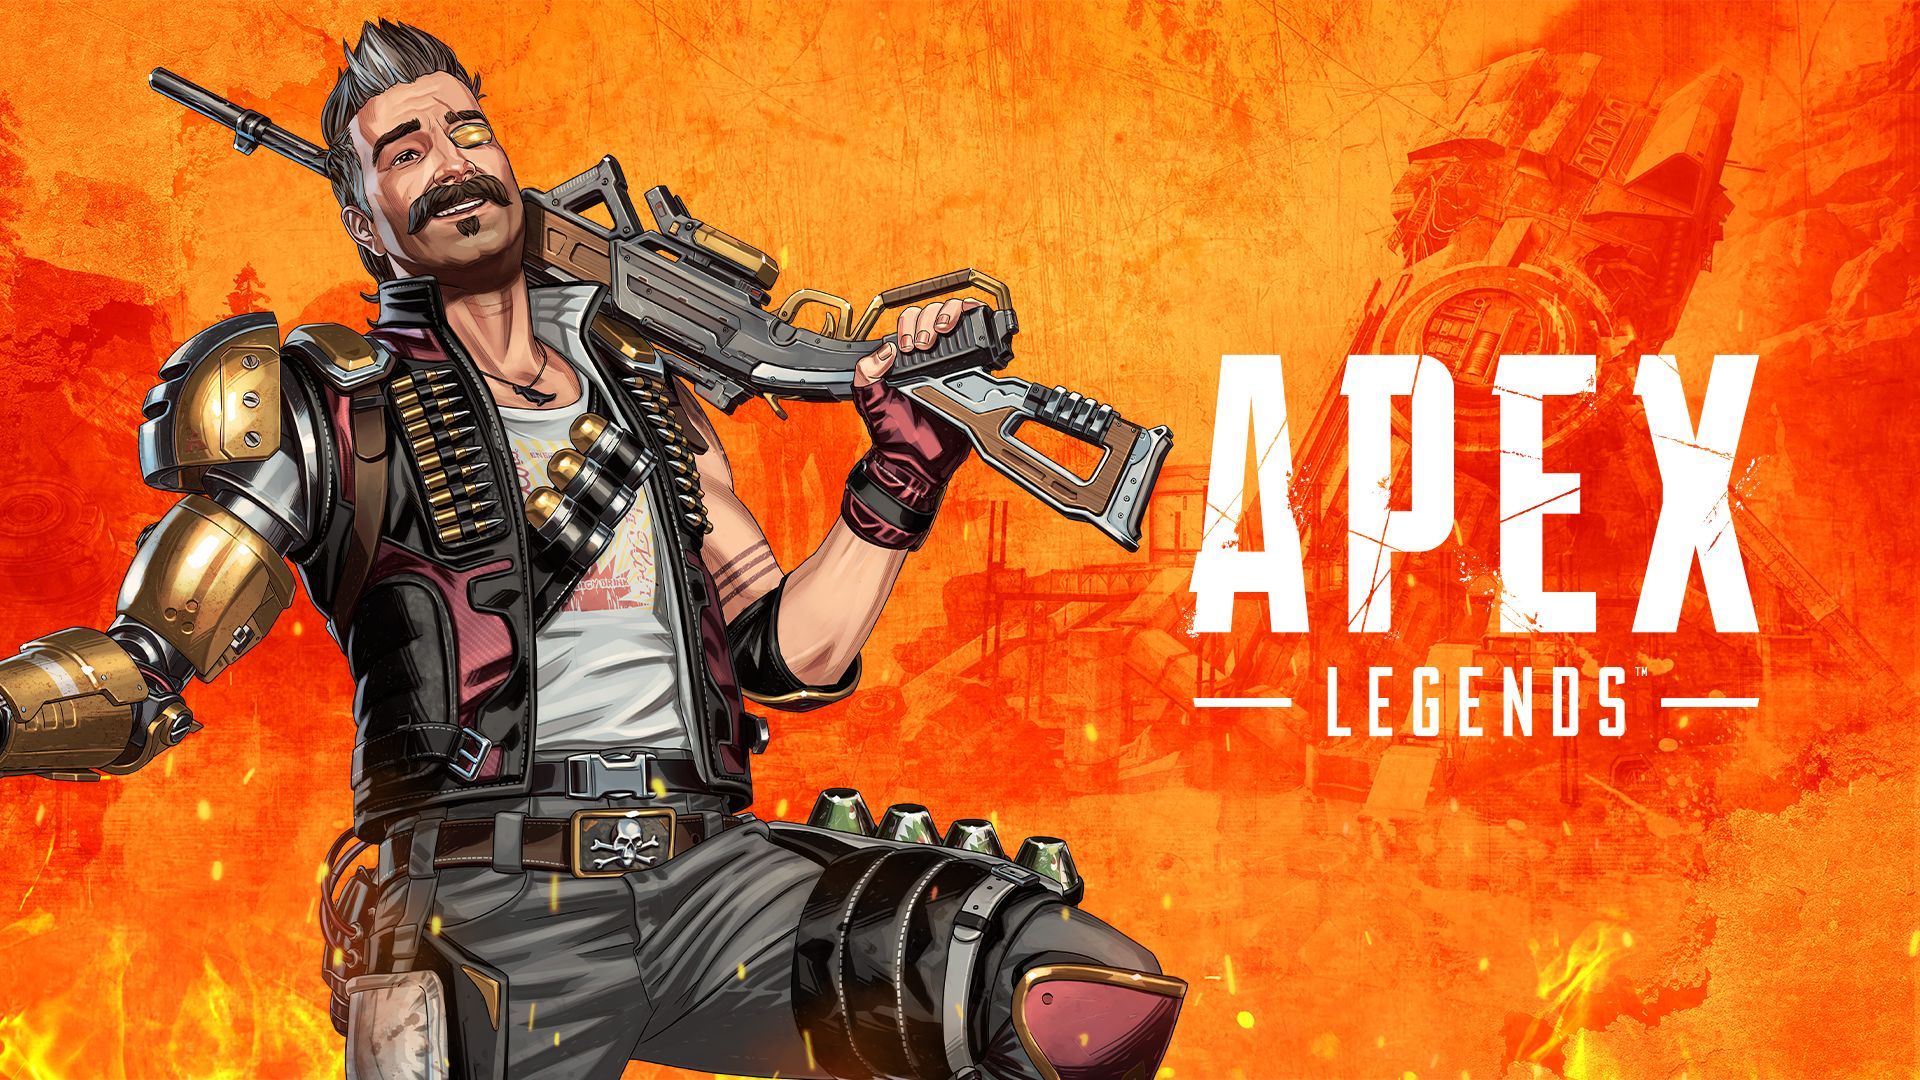 apex legends mobile release date 2021